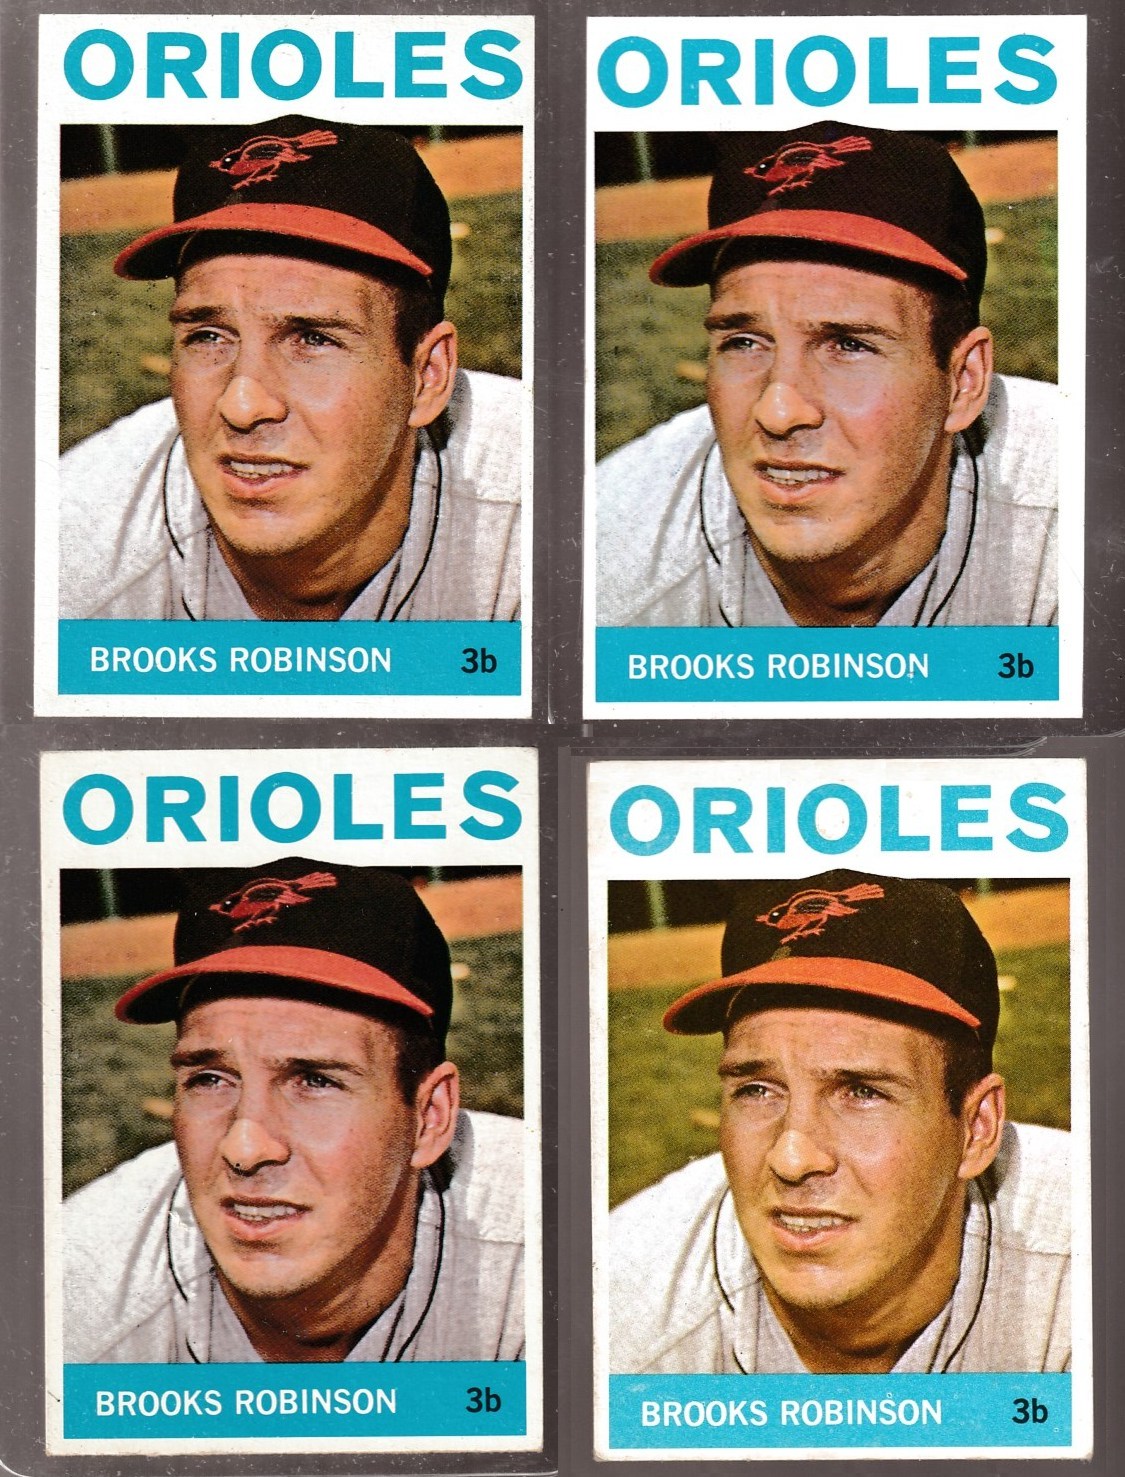 1964 Topps #230 Brooks Robinson [#] (Orioles) Baseball cards value